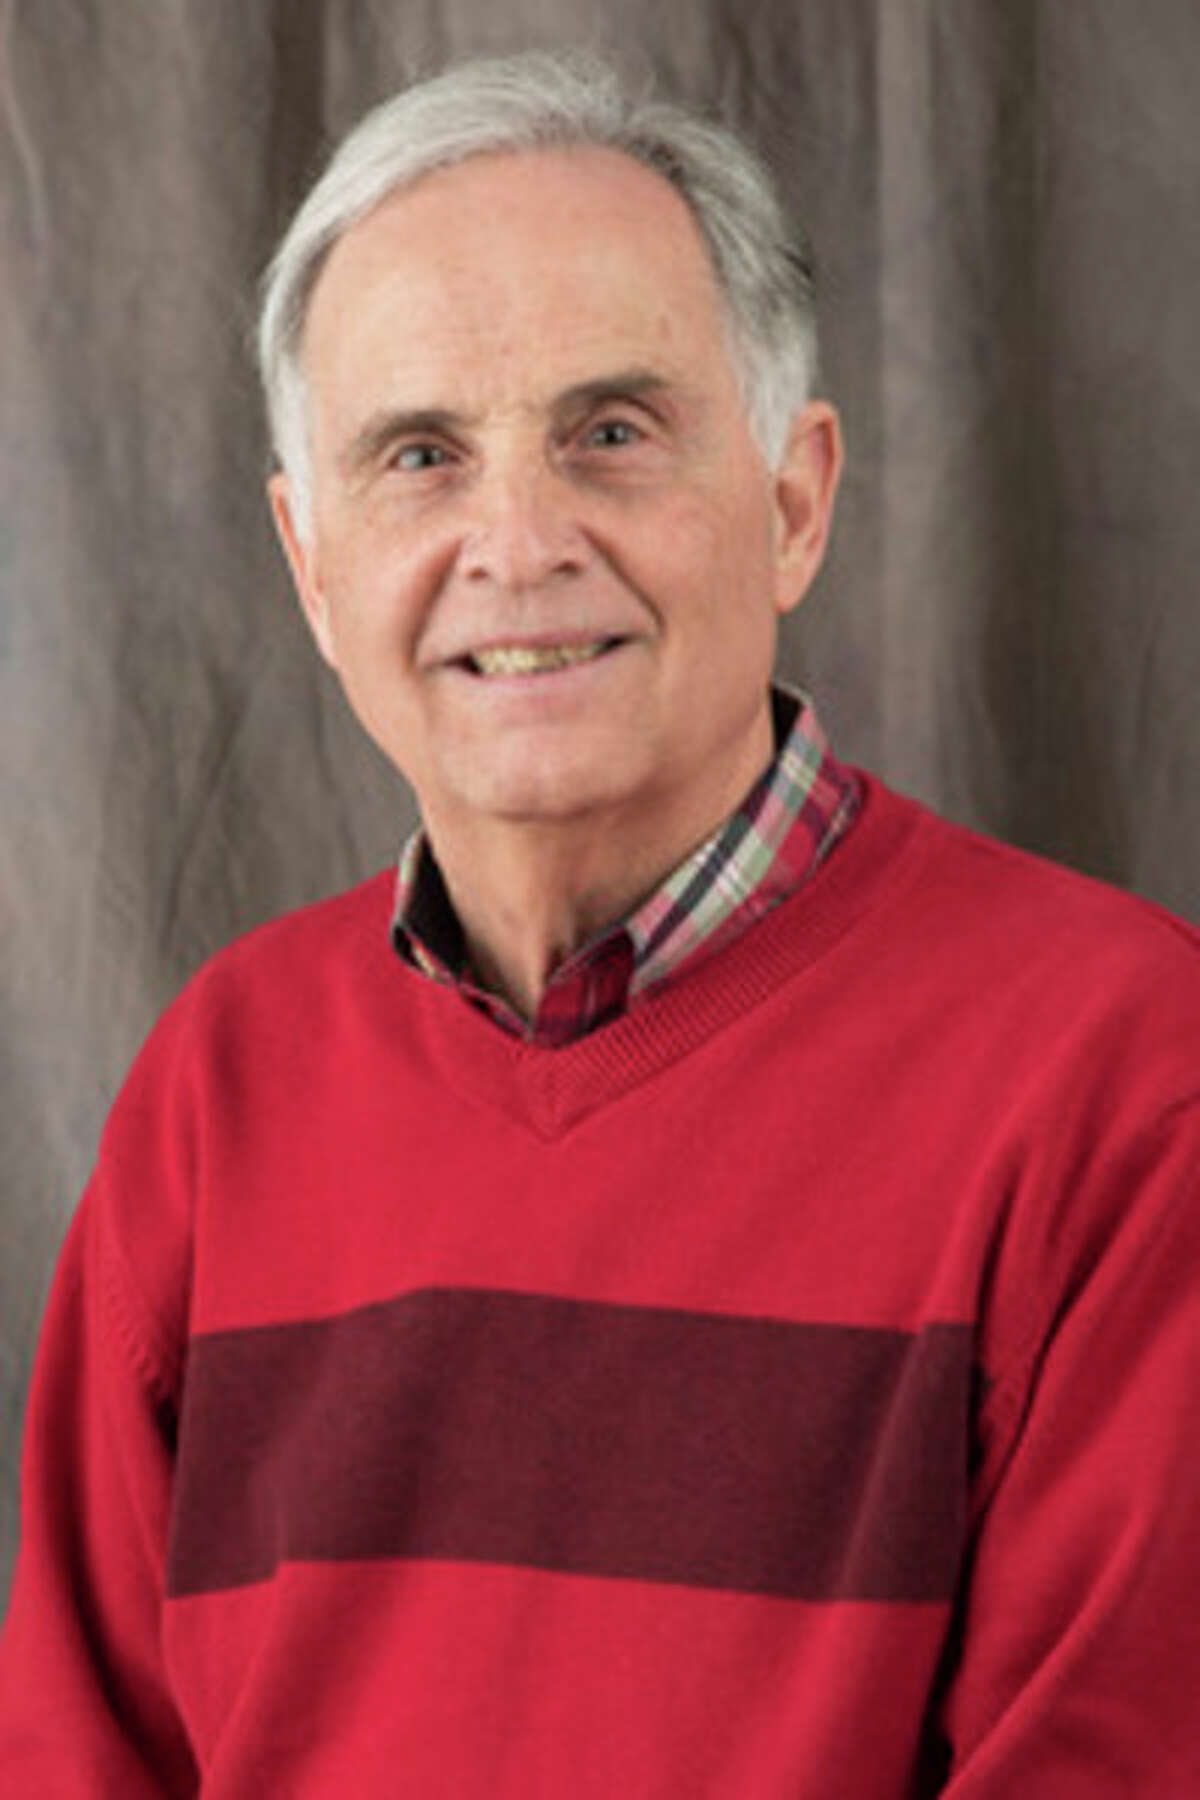 Delta College Facilities Management Director Larry Ramseyer